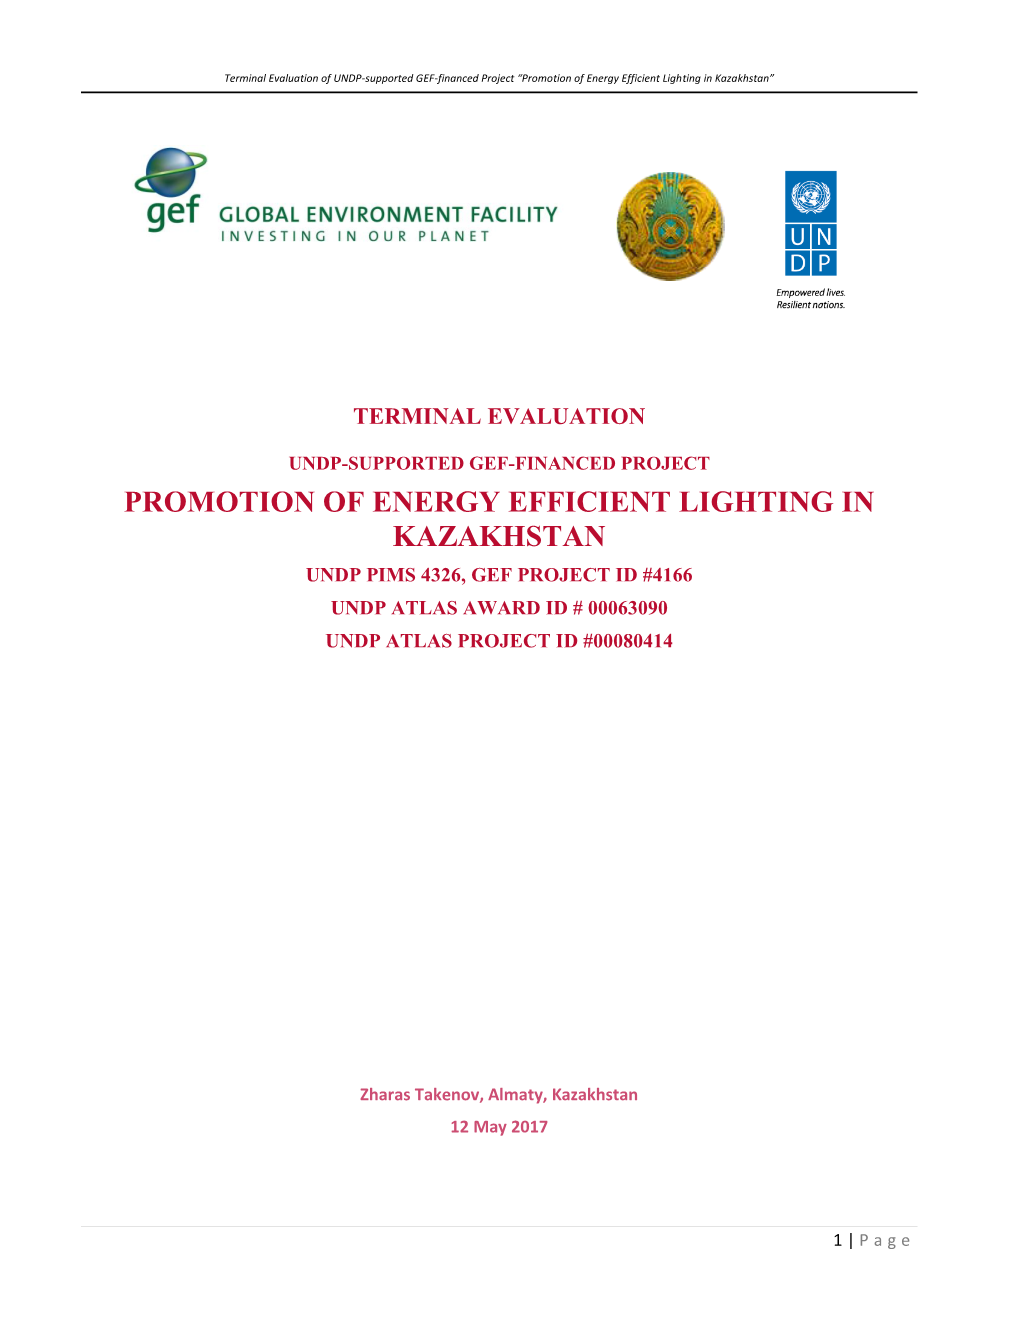 Promotion of Energy Efficient Lighting in Kazakhstan”